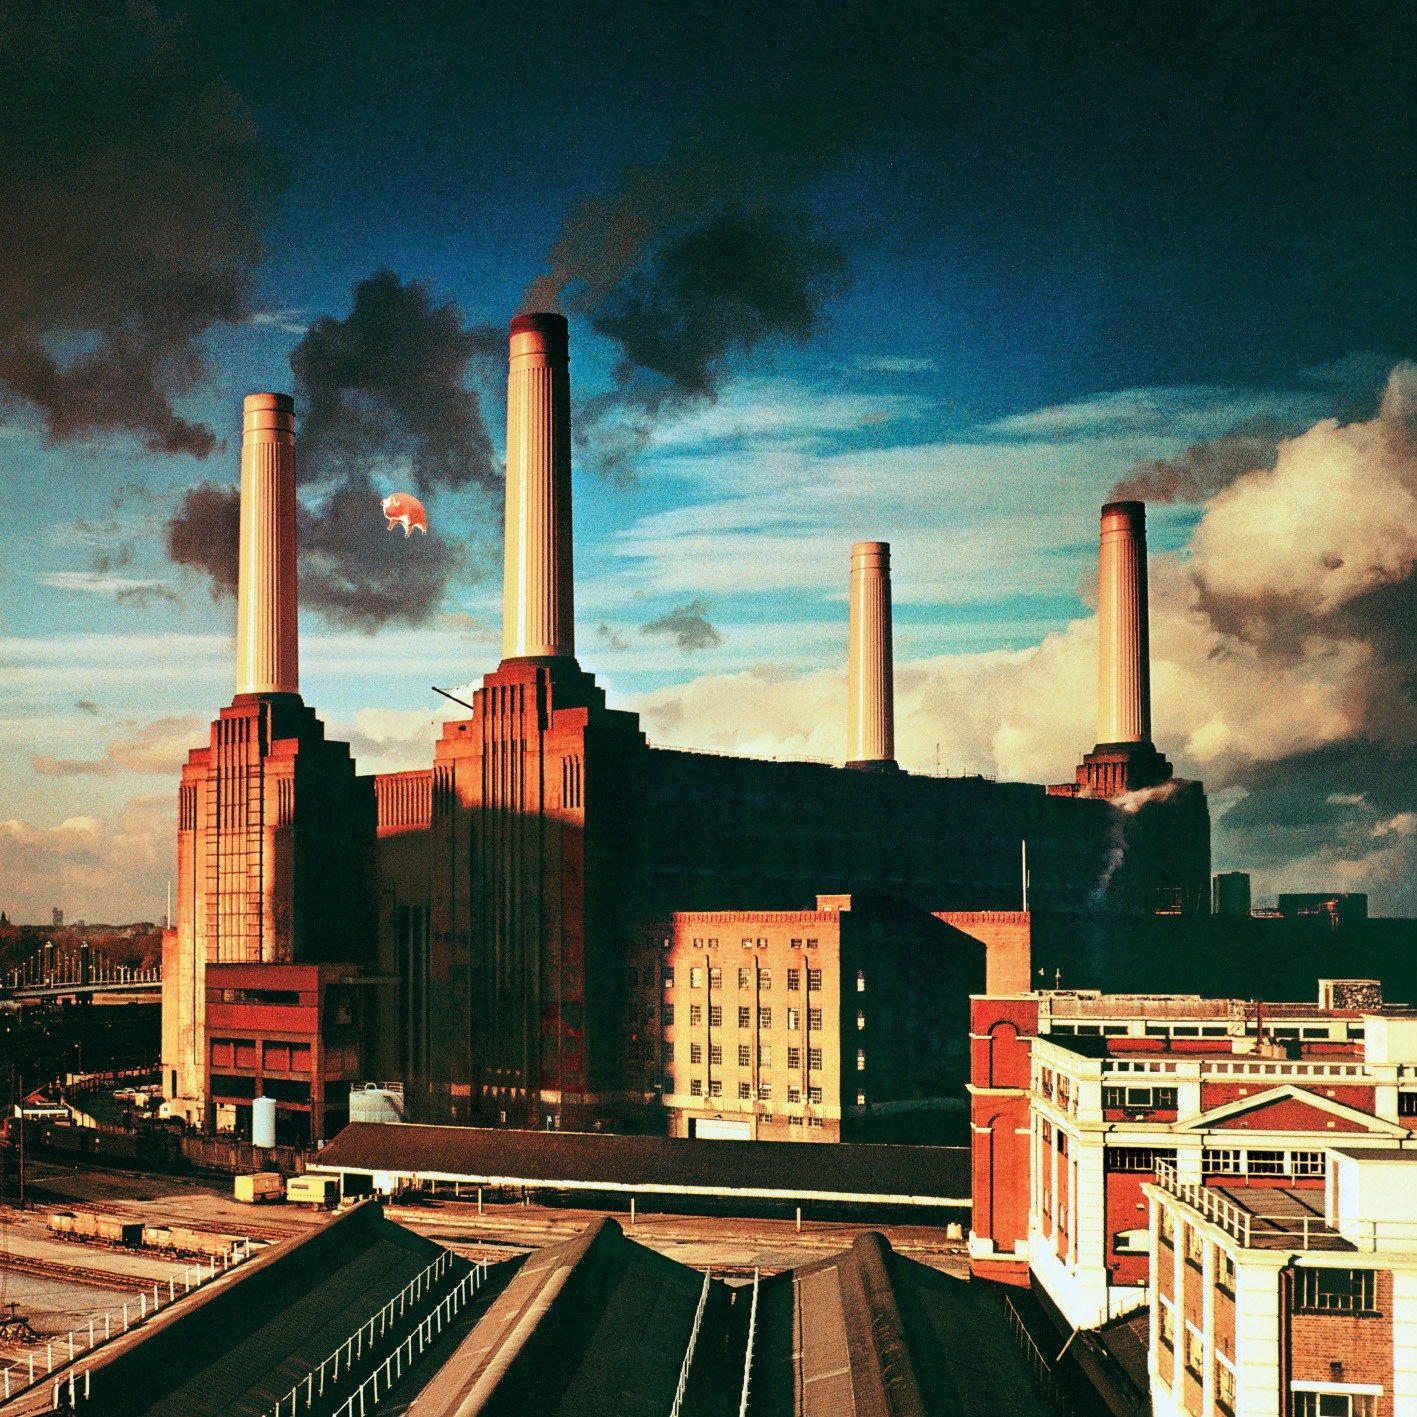 Animals © Pink Floyd Music Ltd